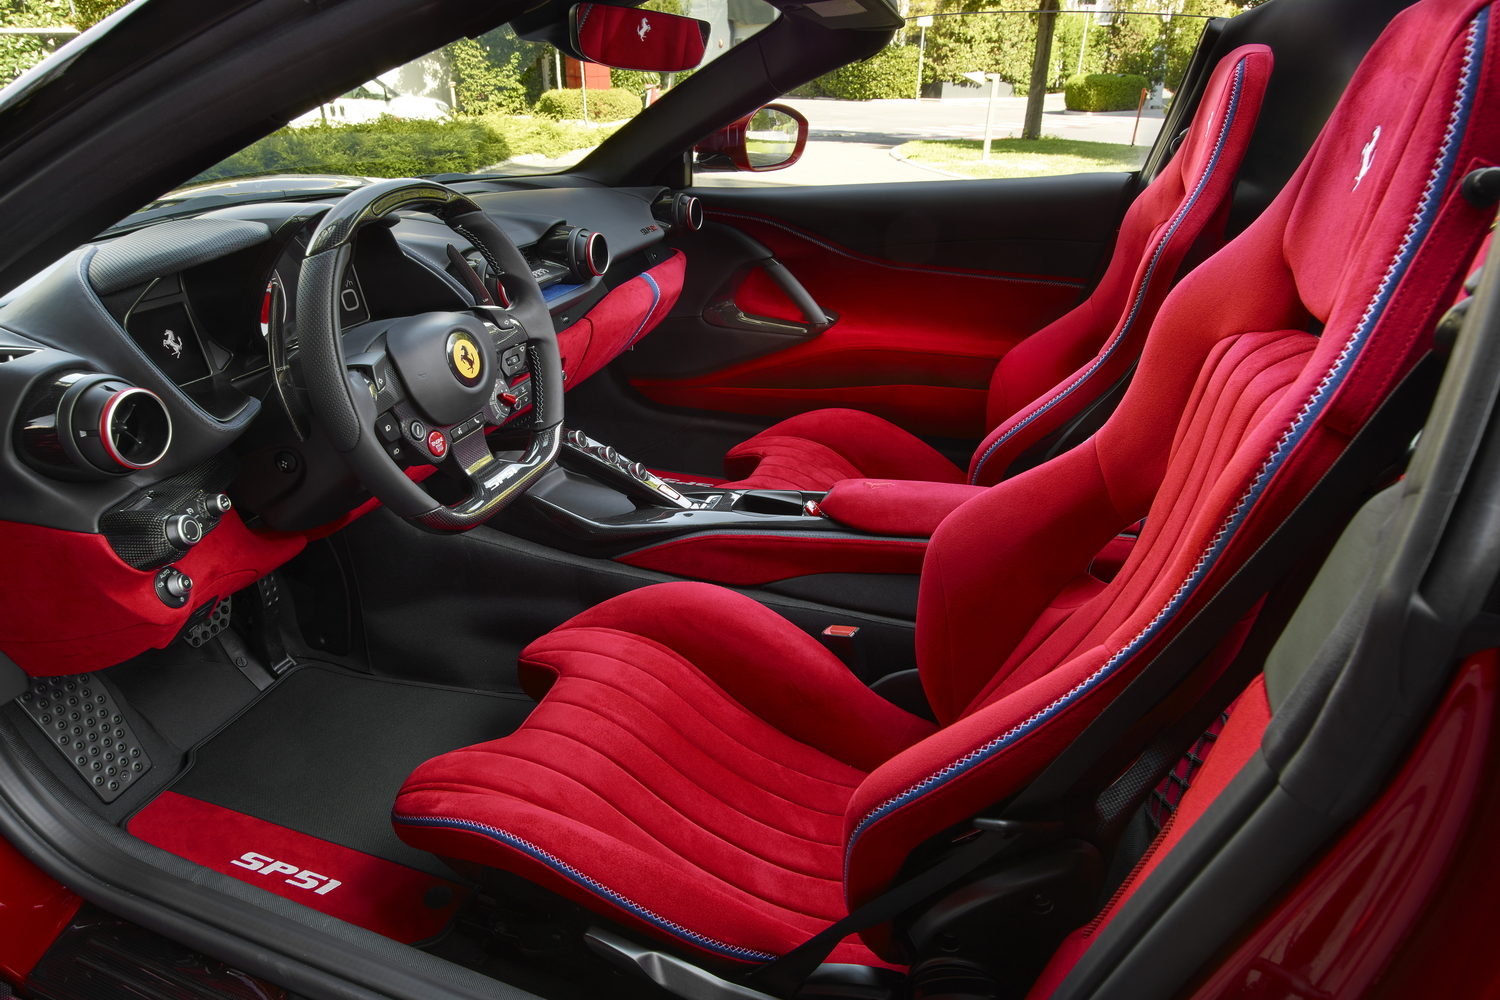 Ferrari SP51 is a one-off head-turner